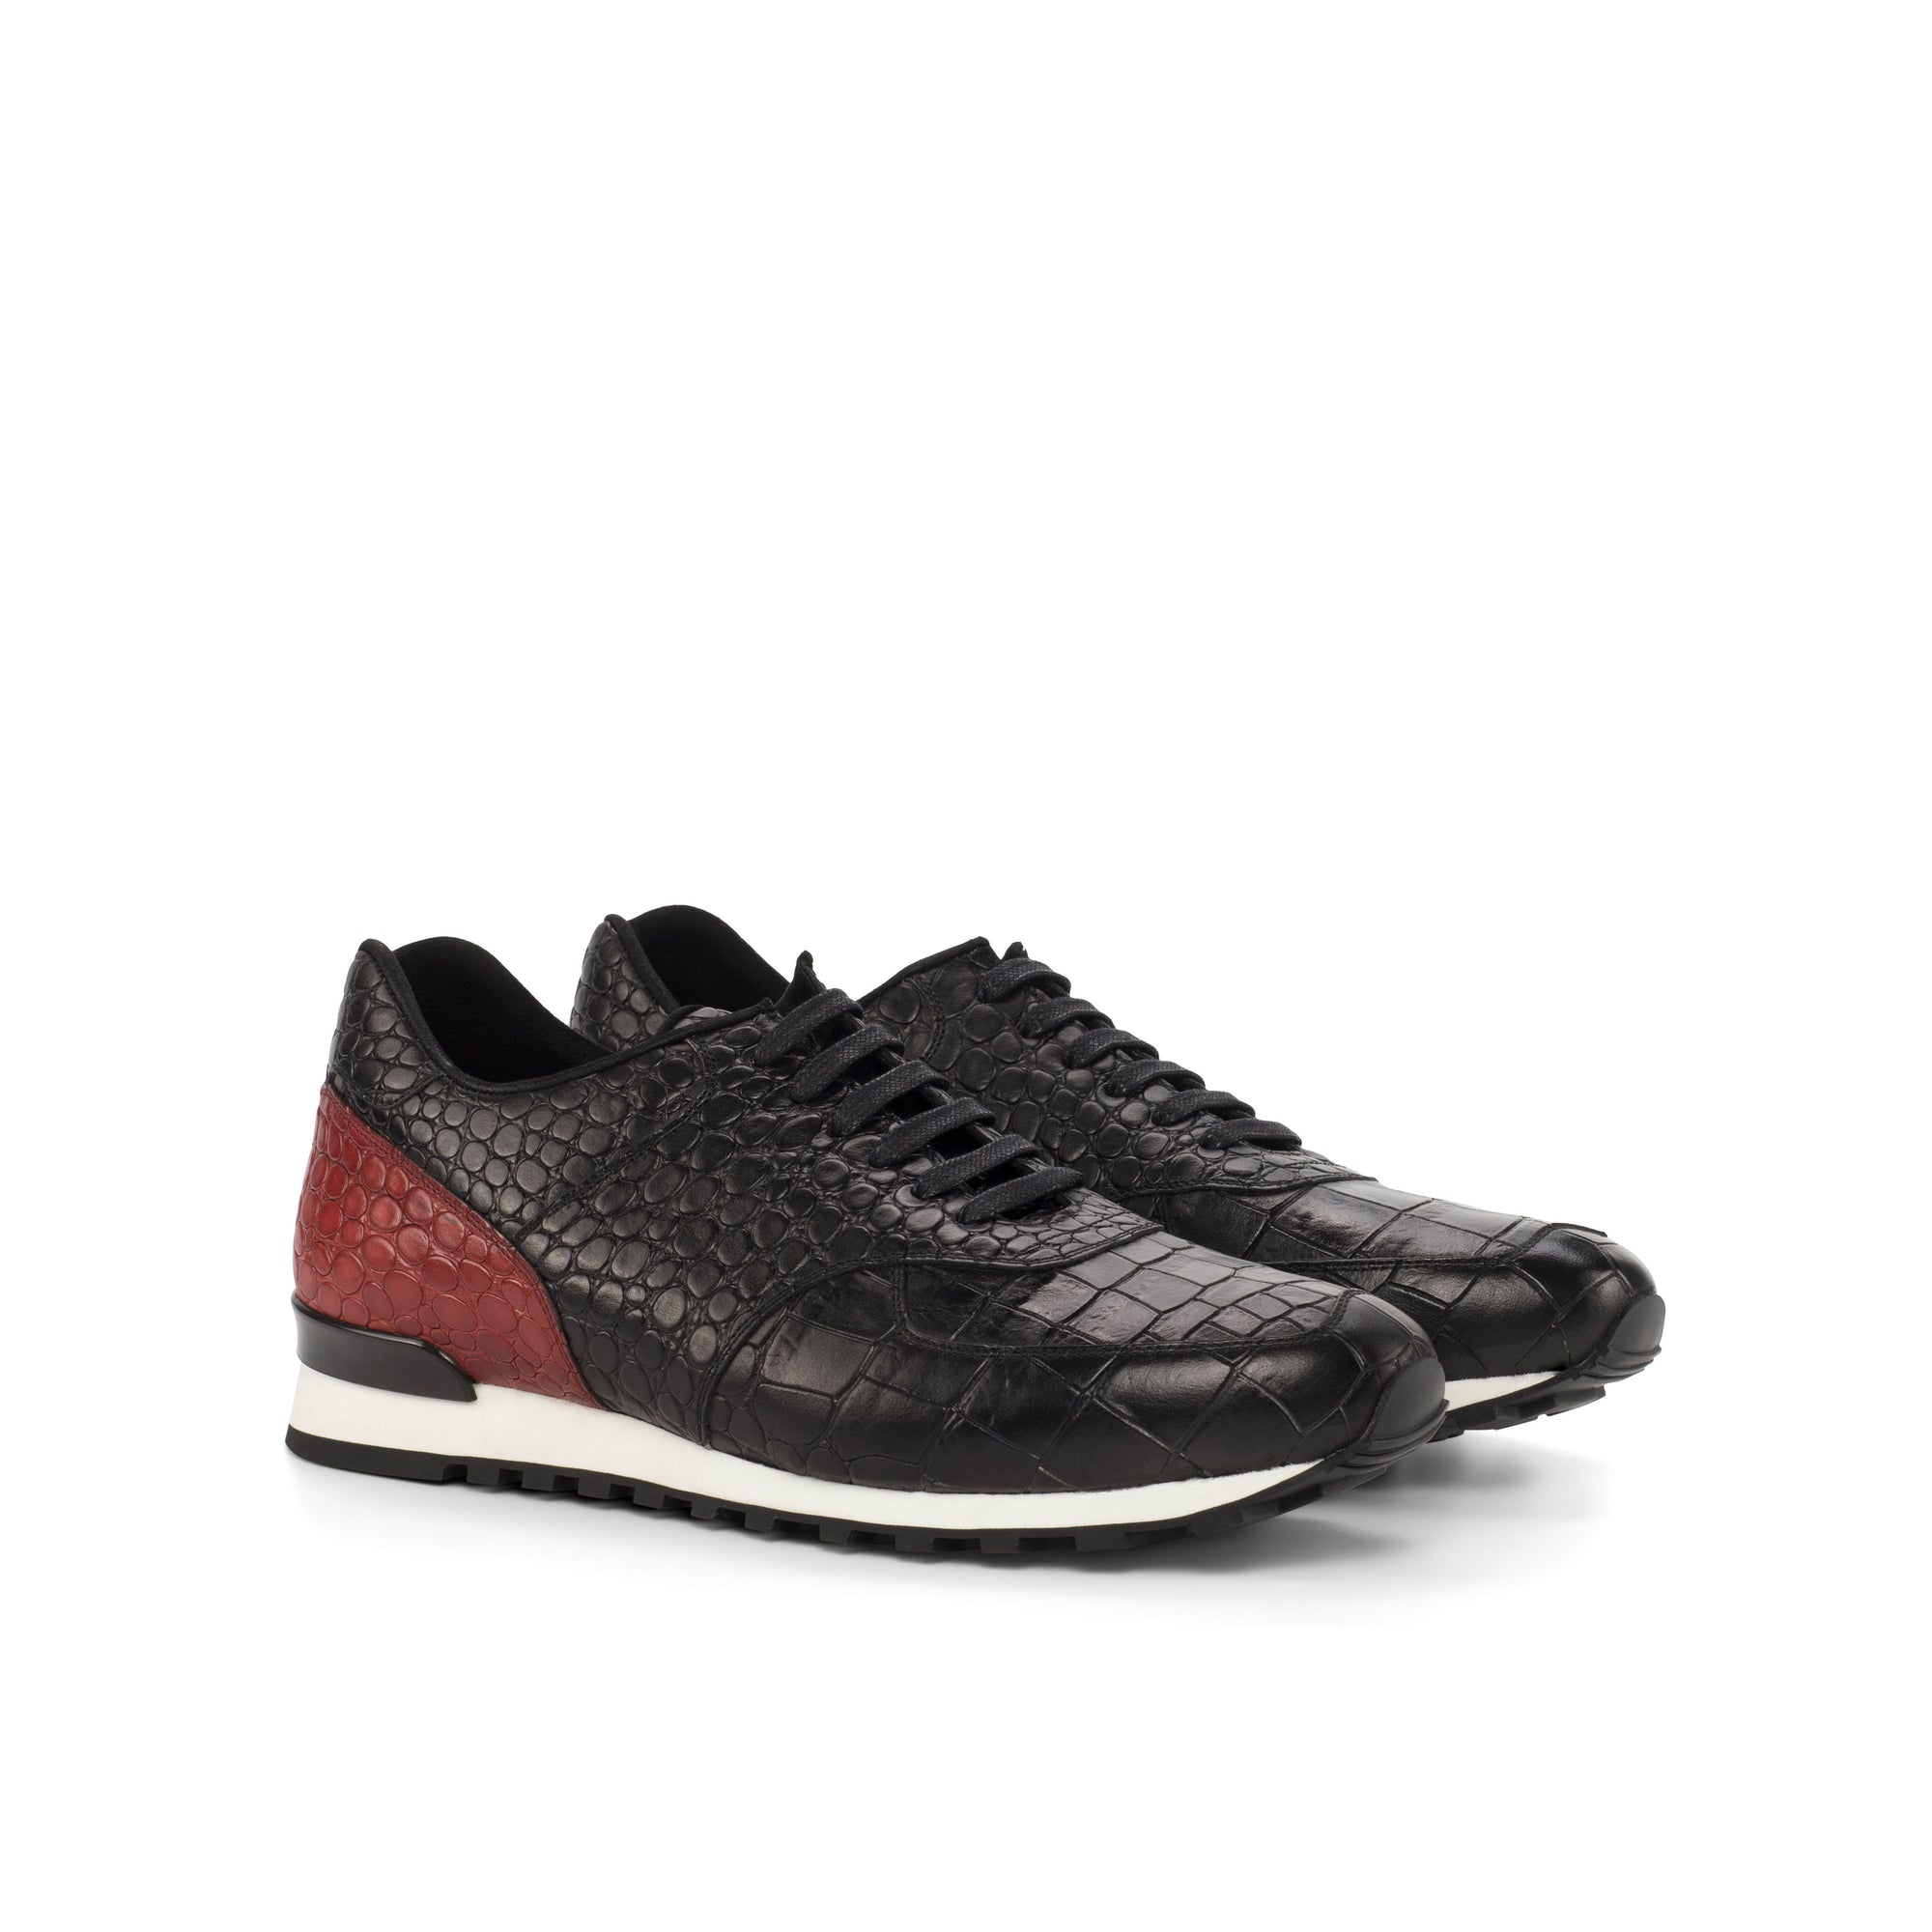 Luxury Black & Red Croco Sneakers - Vibram Sole, Retro-Modern Style